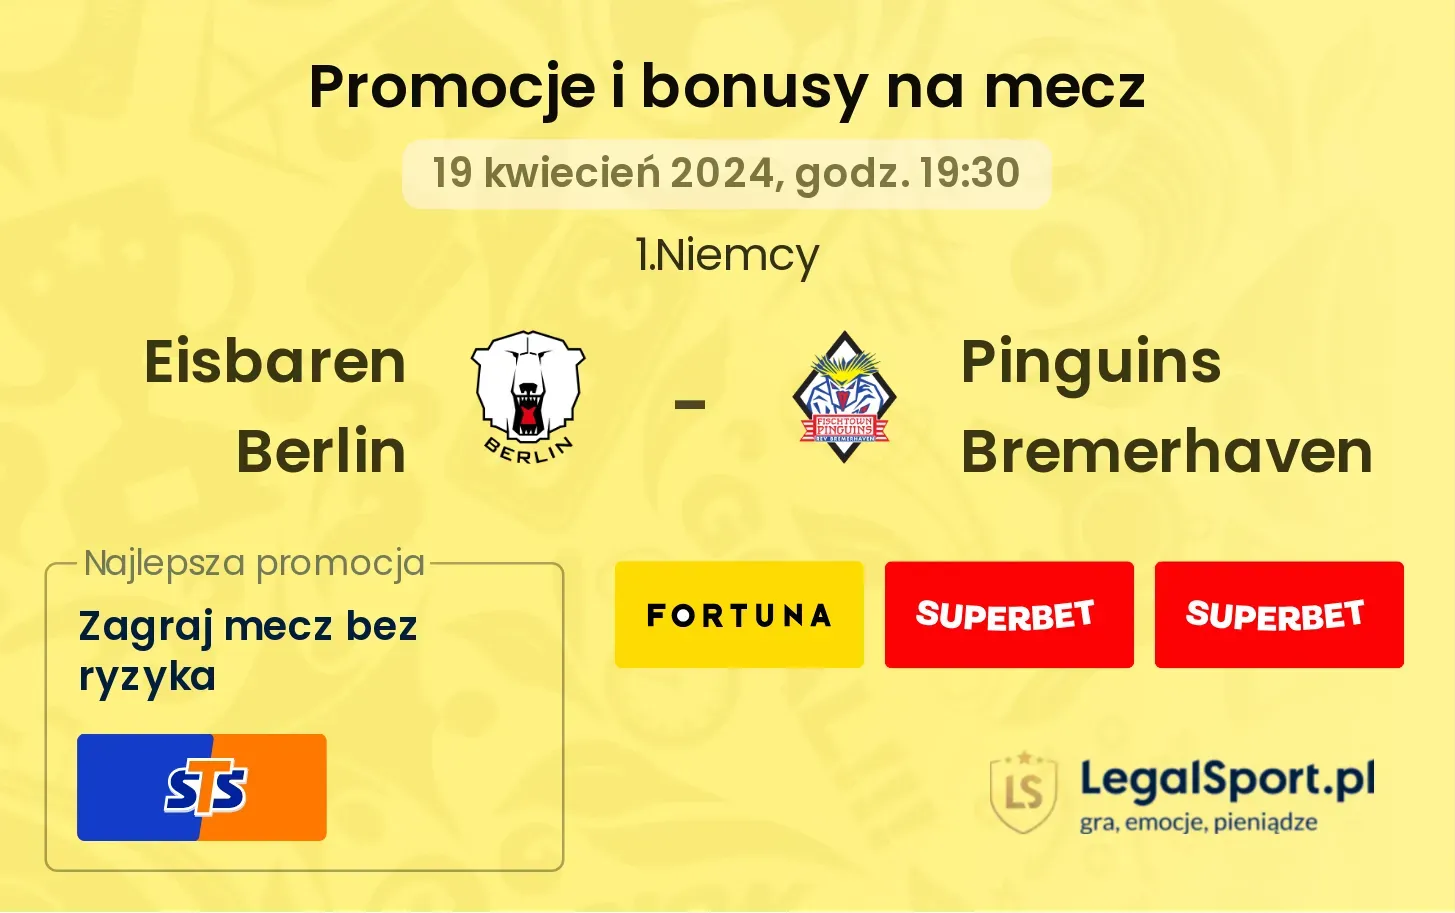  Eisbaren Berlin - Pinguins Bremerhaven bonusy i promocje (19.04, 19:30)